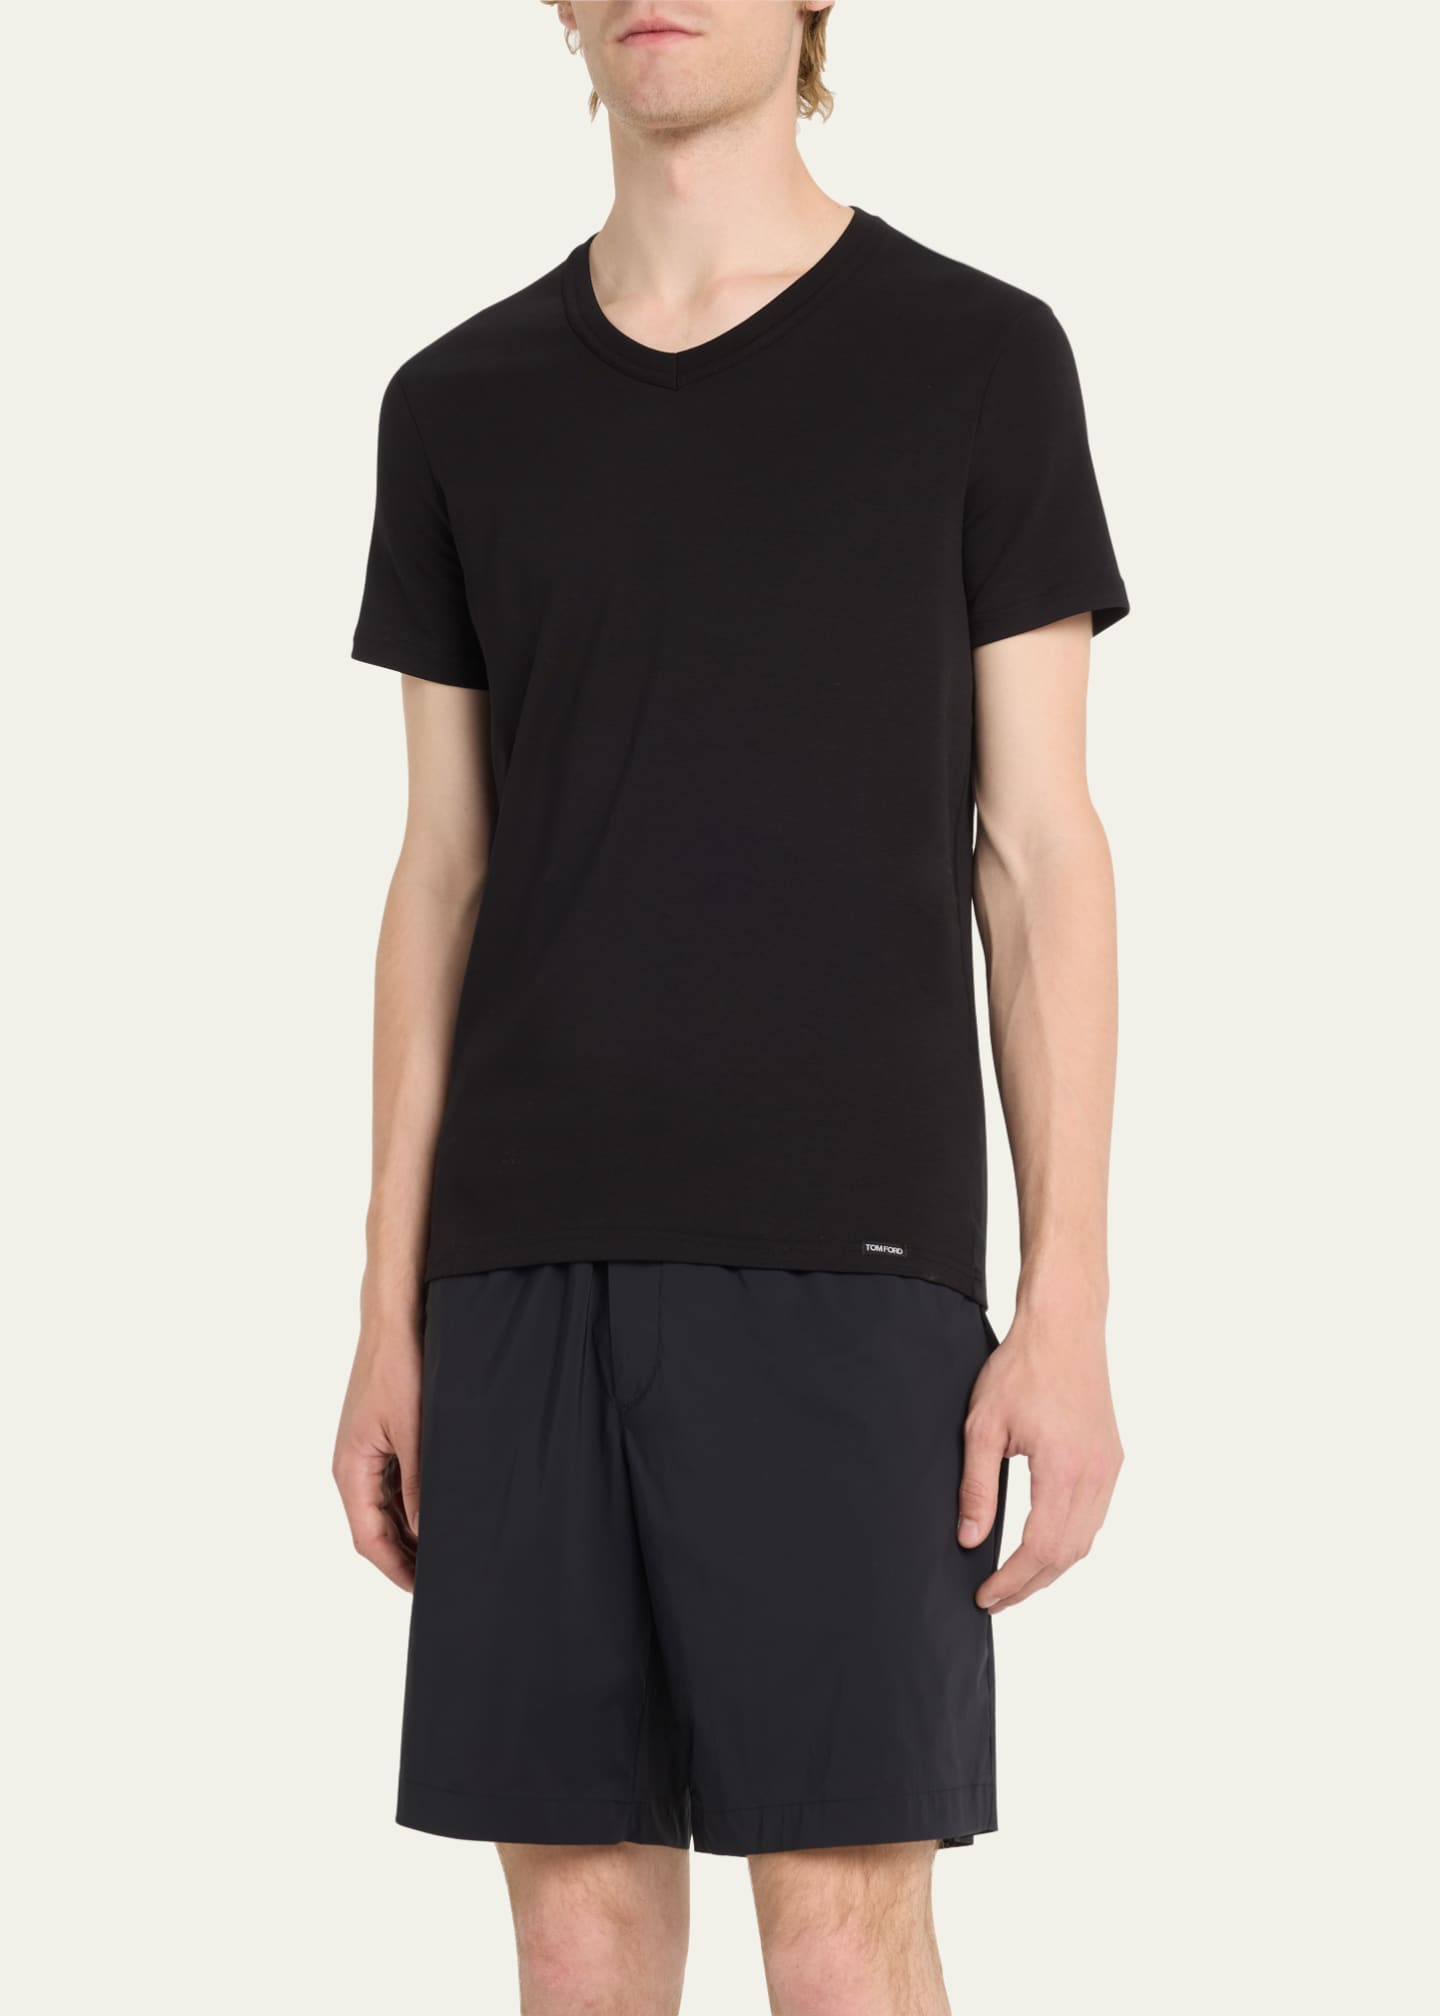 TOM FORD Men's Cotton Stretch Jersey T-shirt - Bergdorf Goodman